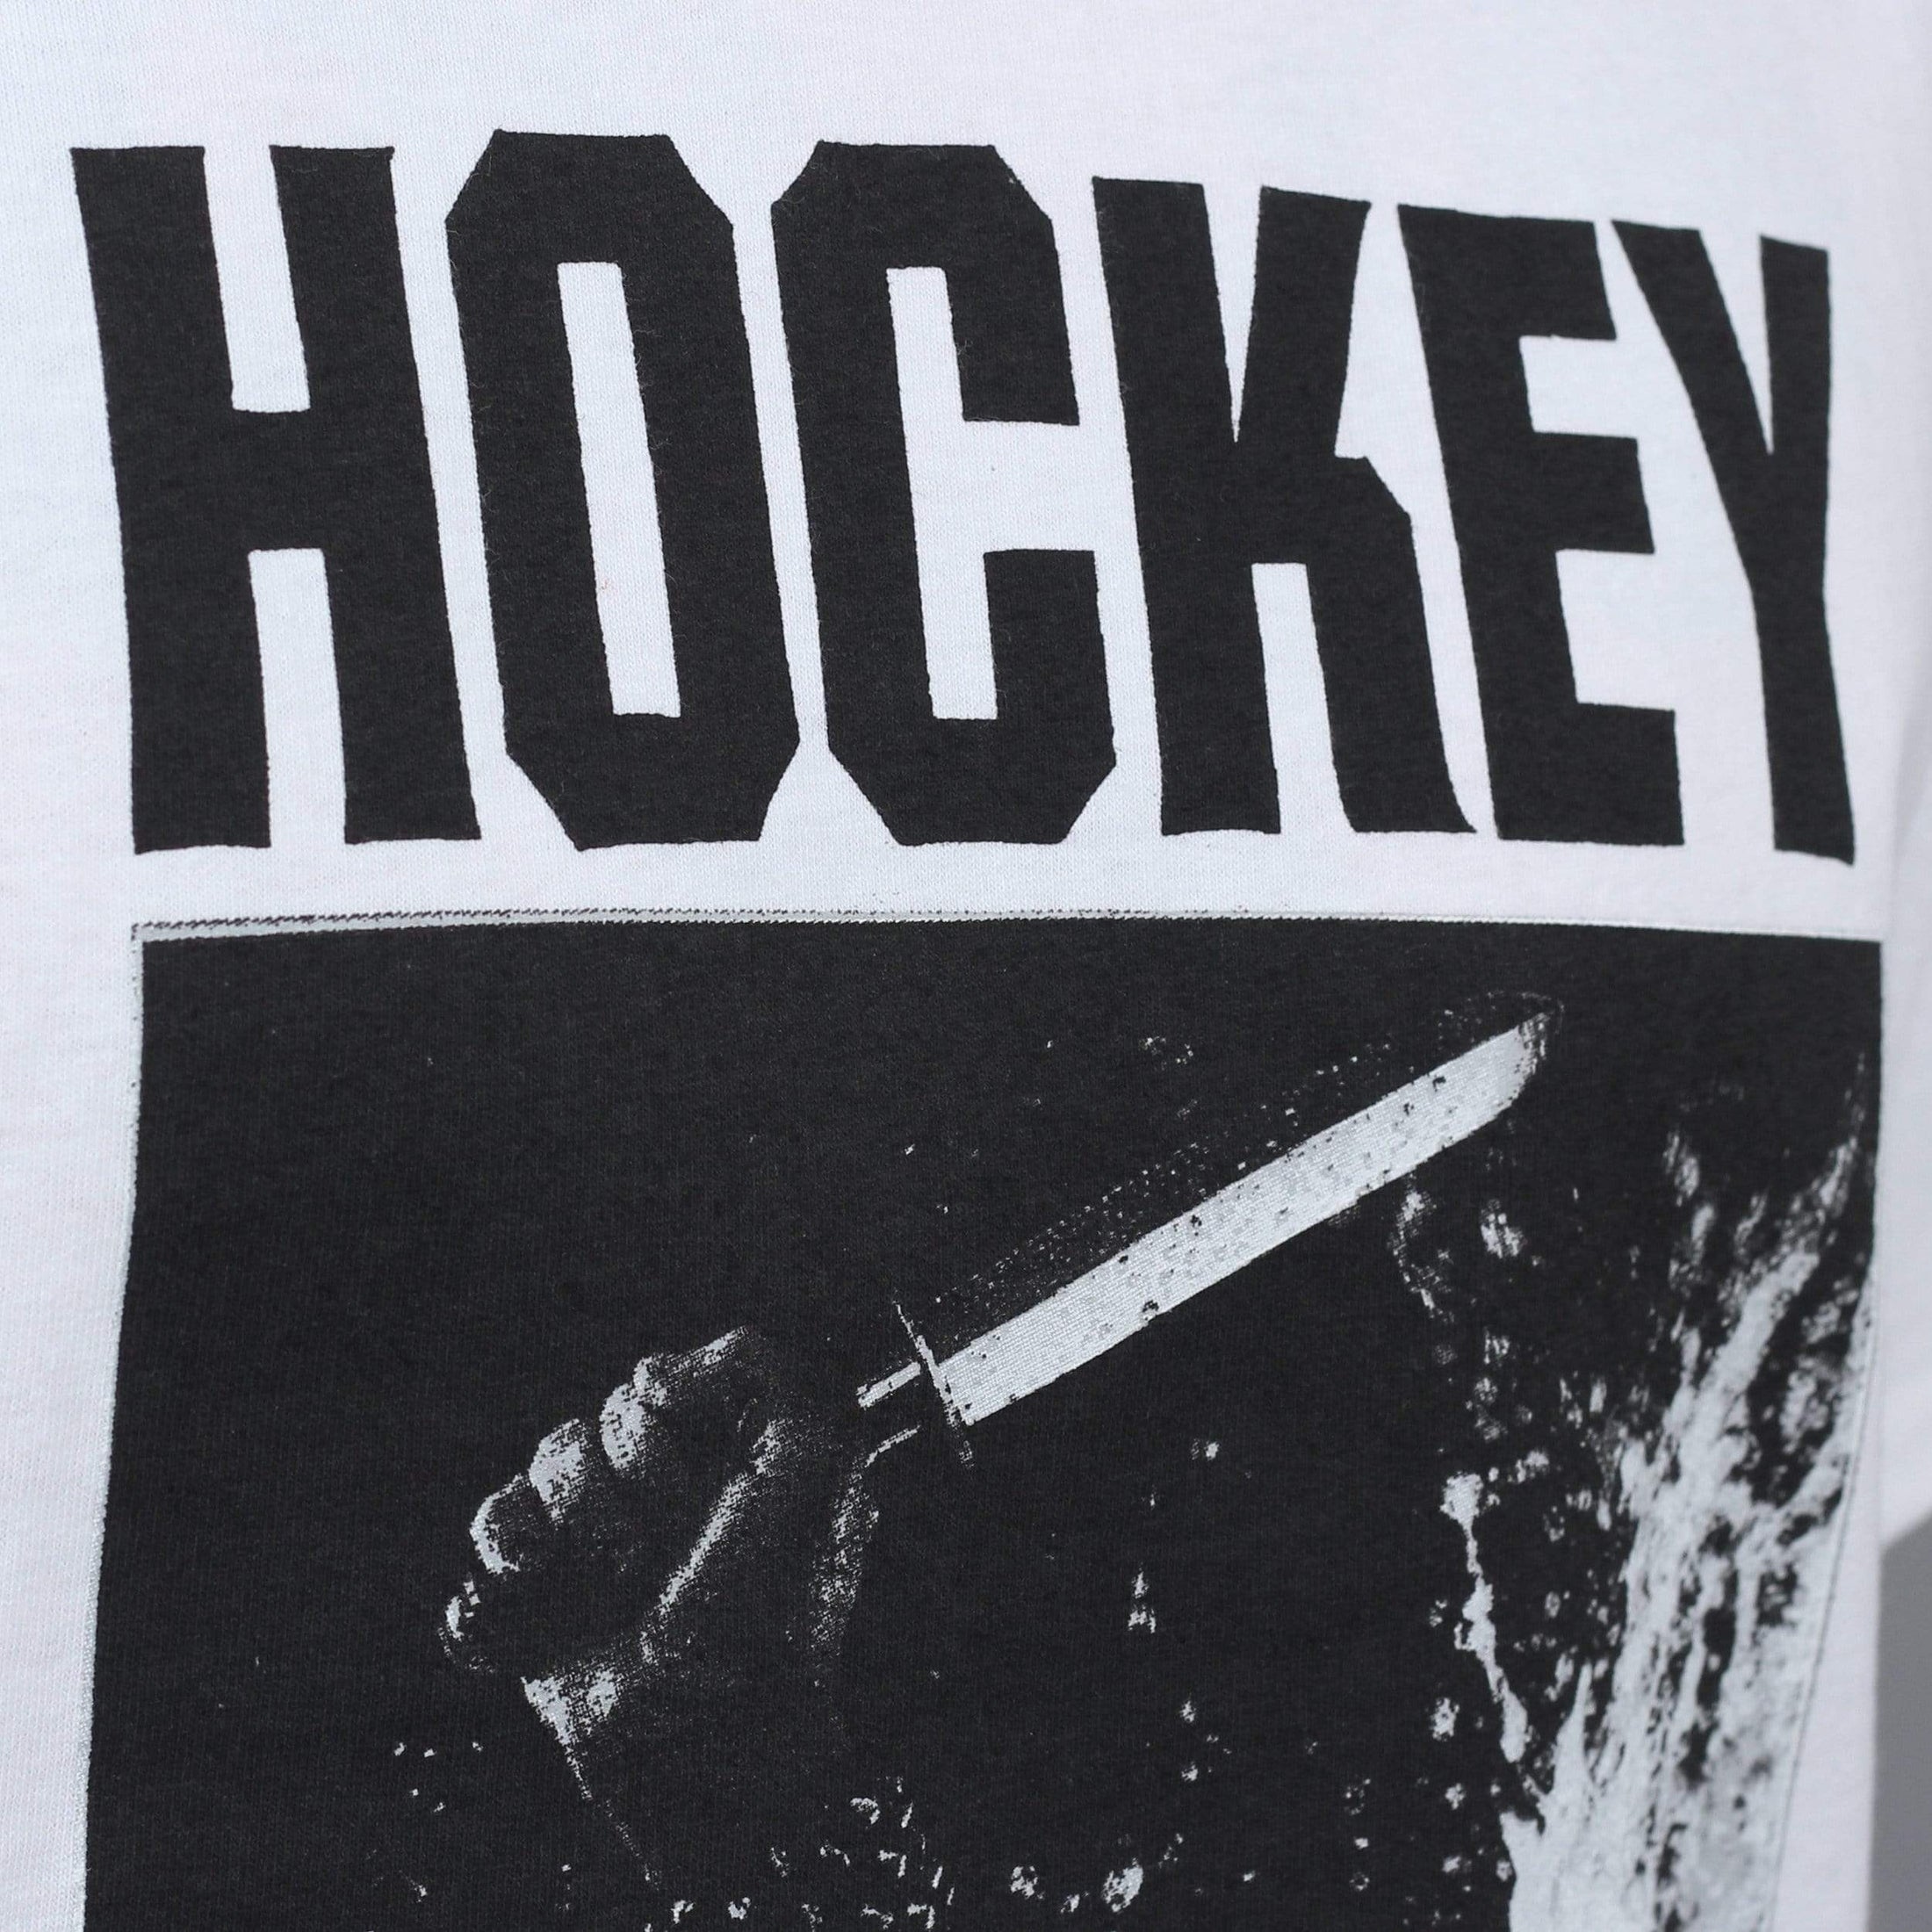 Hockey City Fear T-Shirt White